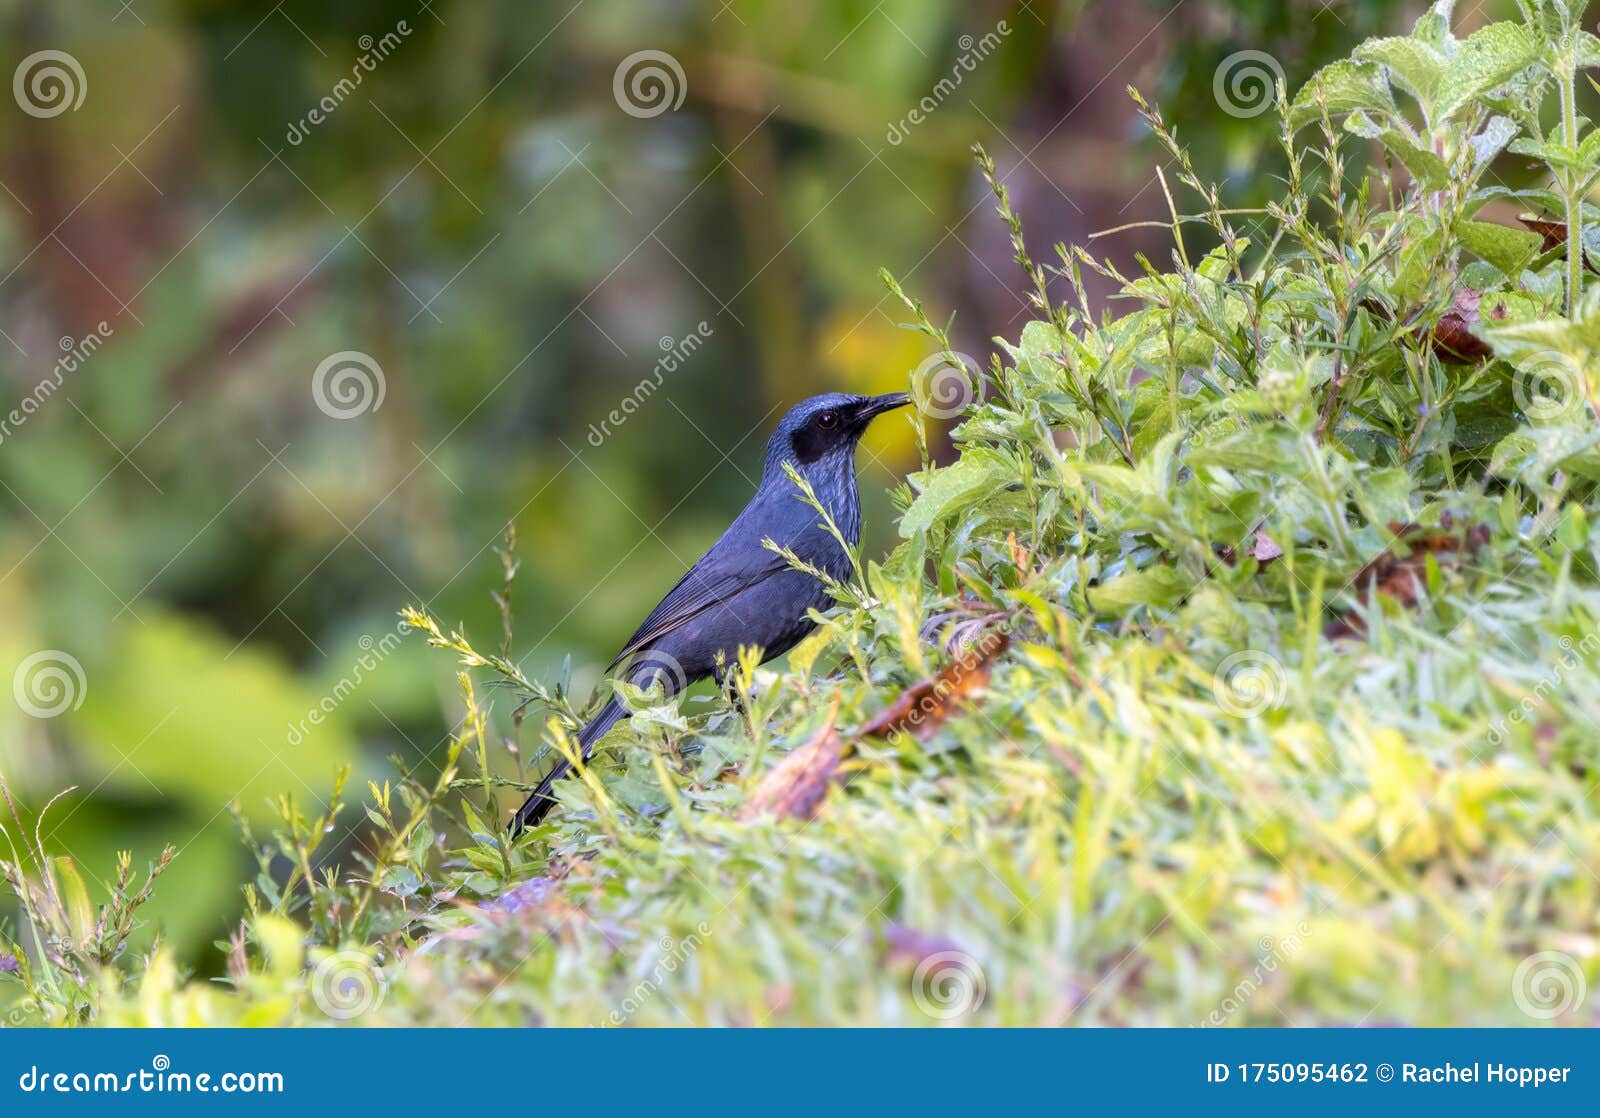 blue mockingbird melanotis caerulescens perched in dense vegetation in jalisco, mexico